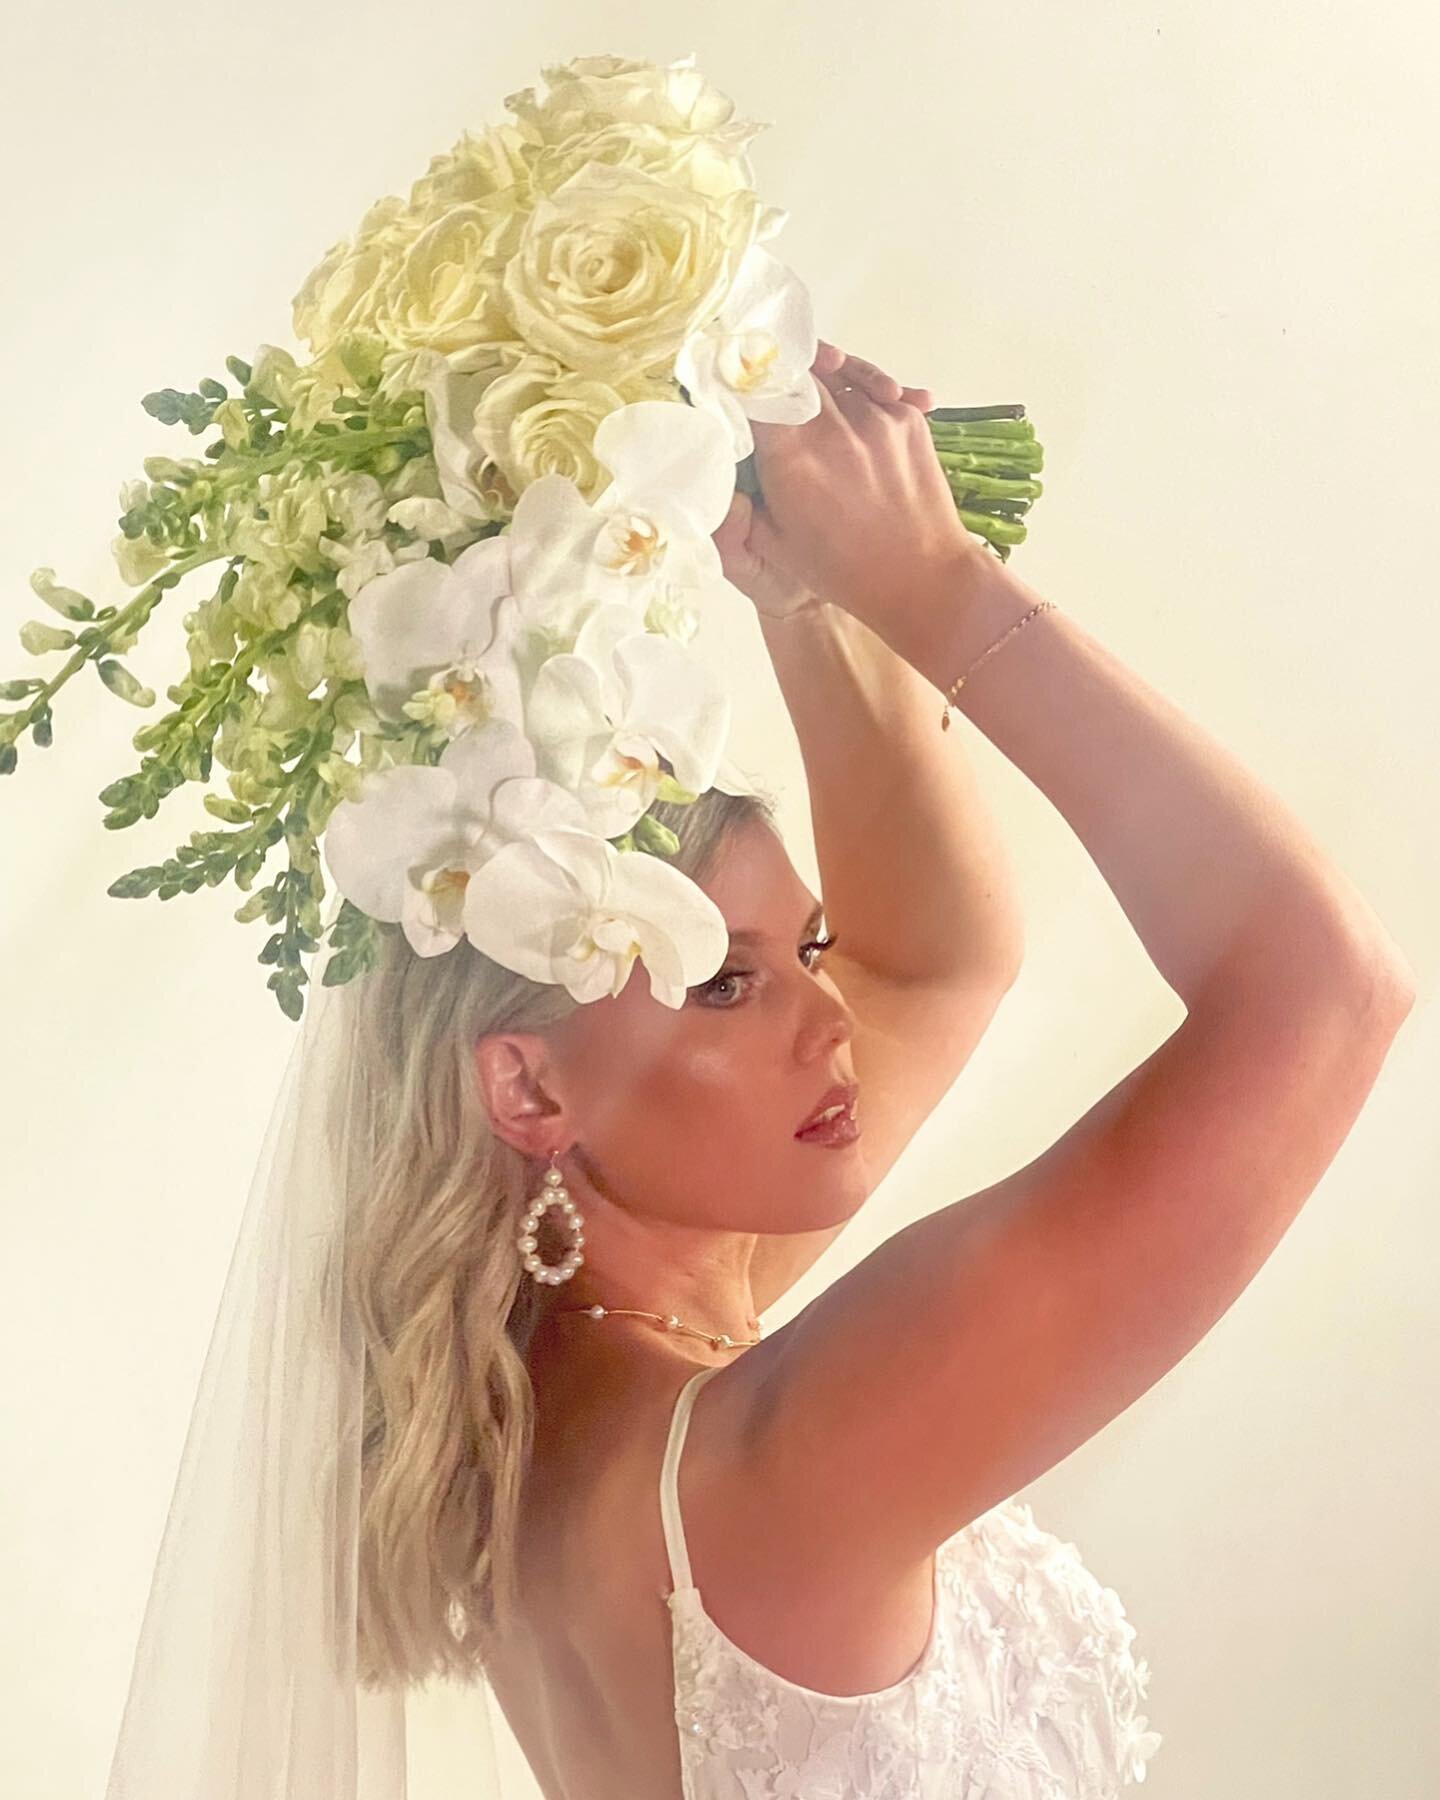 My little artistic spin on a classic bouquet 💫

#bridalbouquet #bouquet #dreamwedding #wedding #weddingbouquet #weddingflowers 

Model: @imafanofshan
Jewelry: @hanibeejewelry